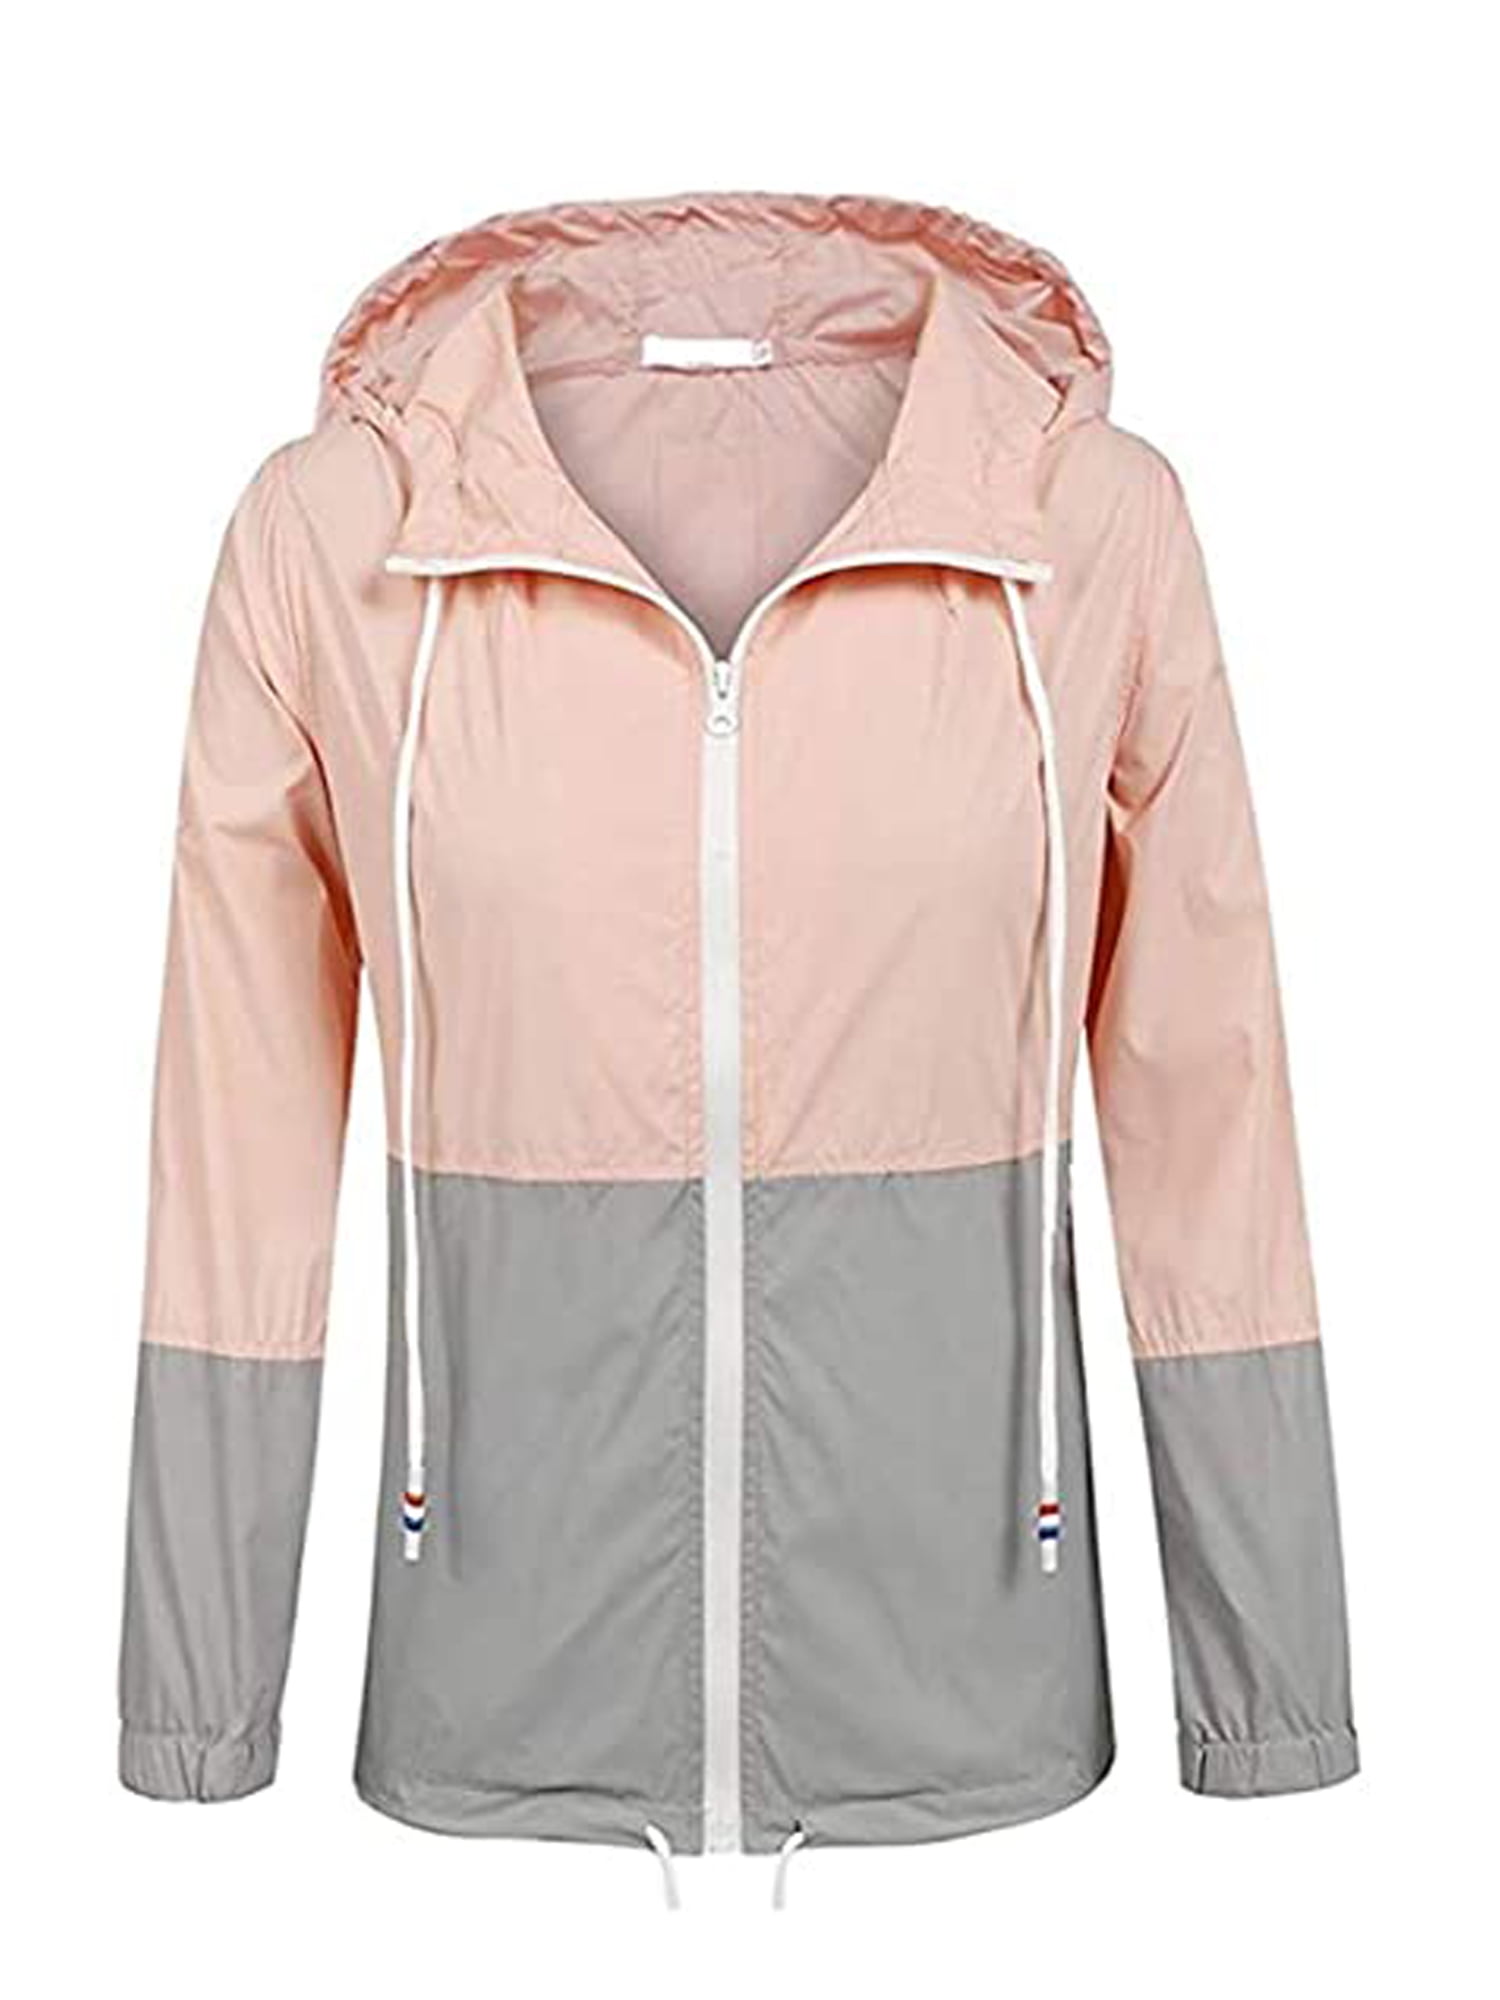 Women 2Pcs Packable Waterproof Jacket Outdoor Hooded Windbreaker with Adjustable Drawstring Rain Jacket Carrying Pouch